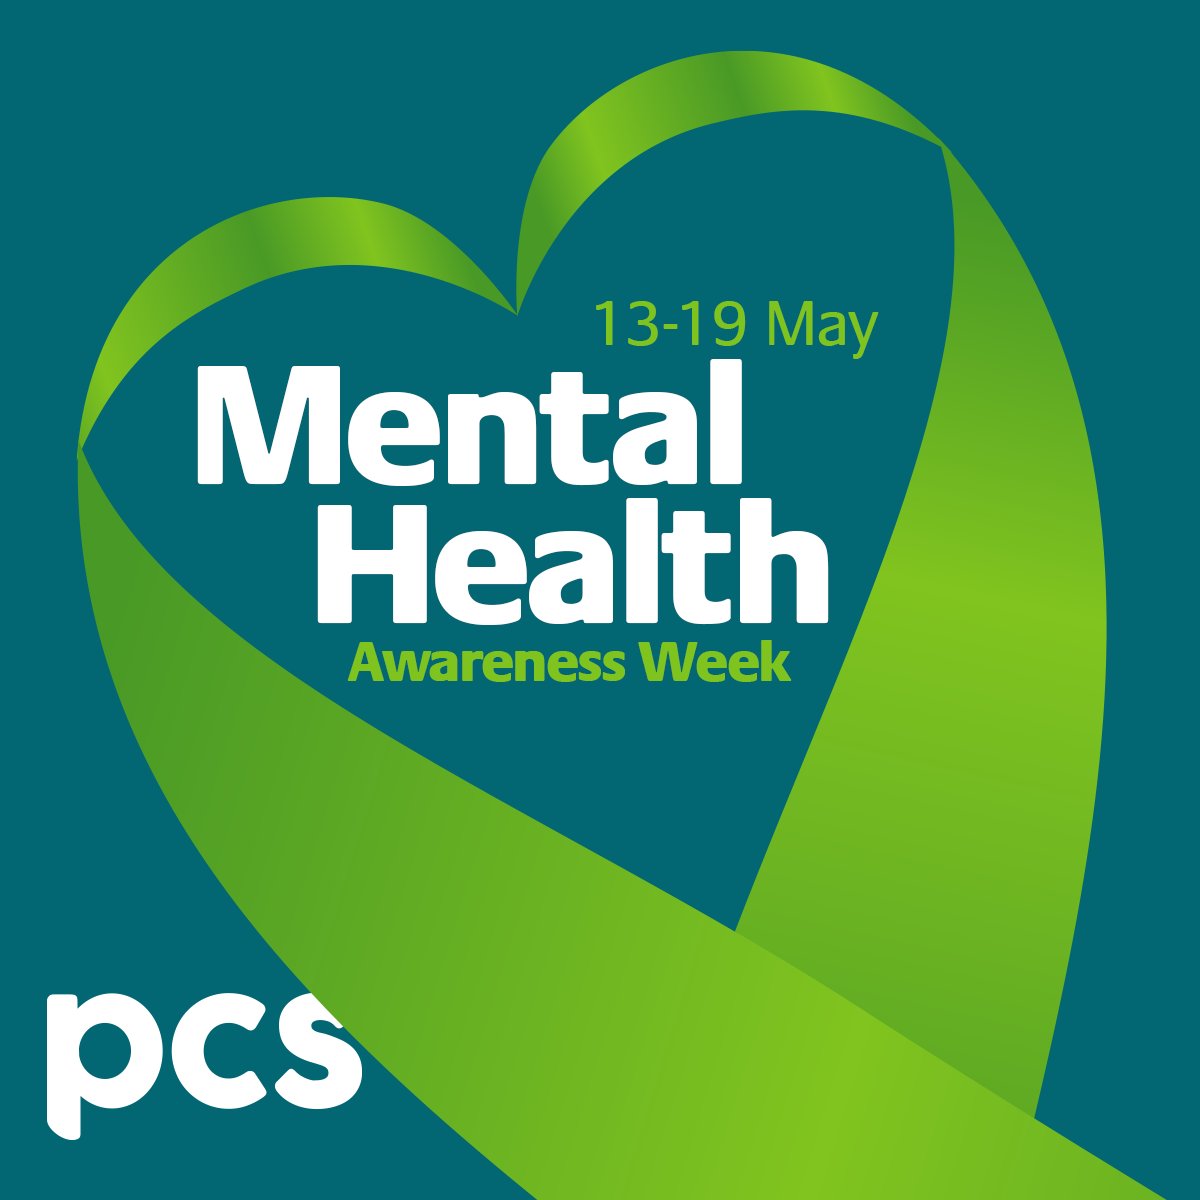 PCS, supporting workplace mental health. #PCS #MentalHealthAwarenessWeek